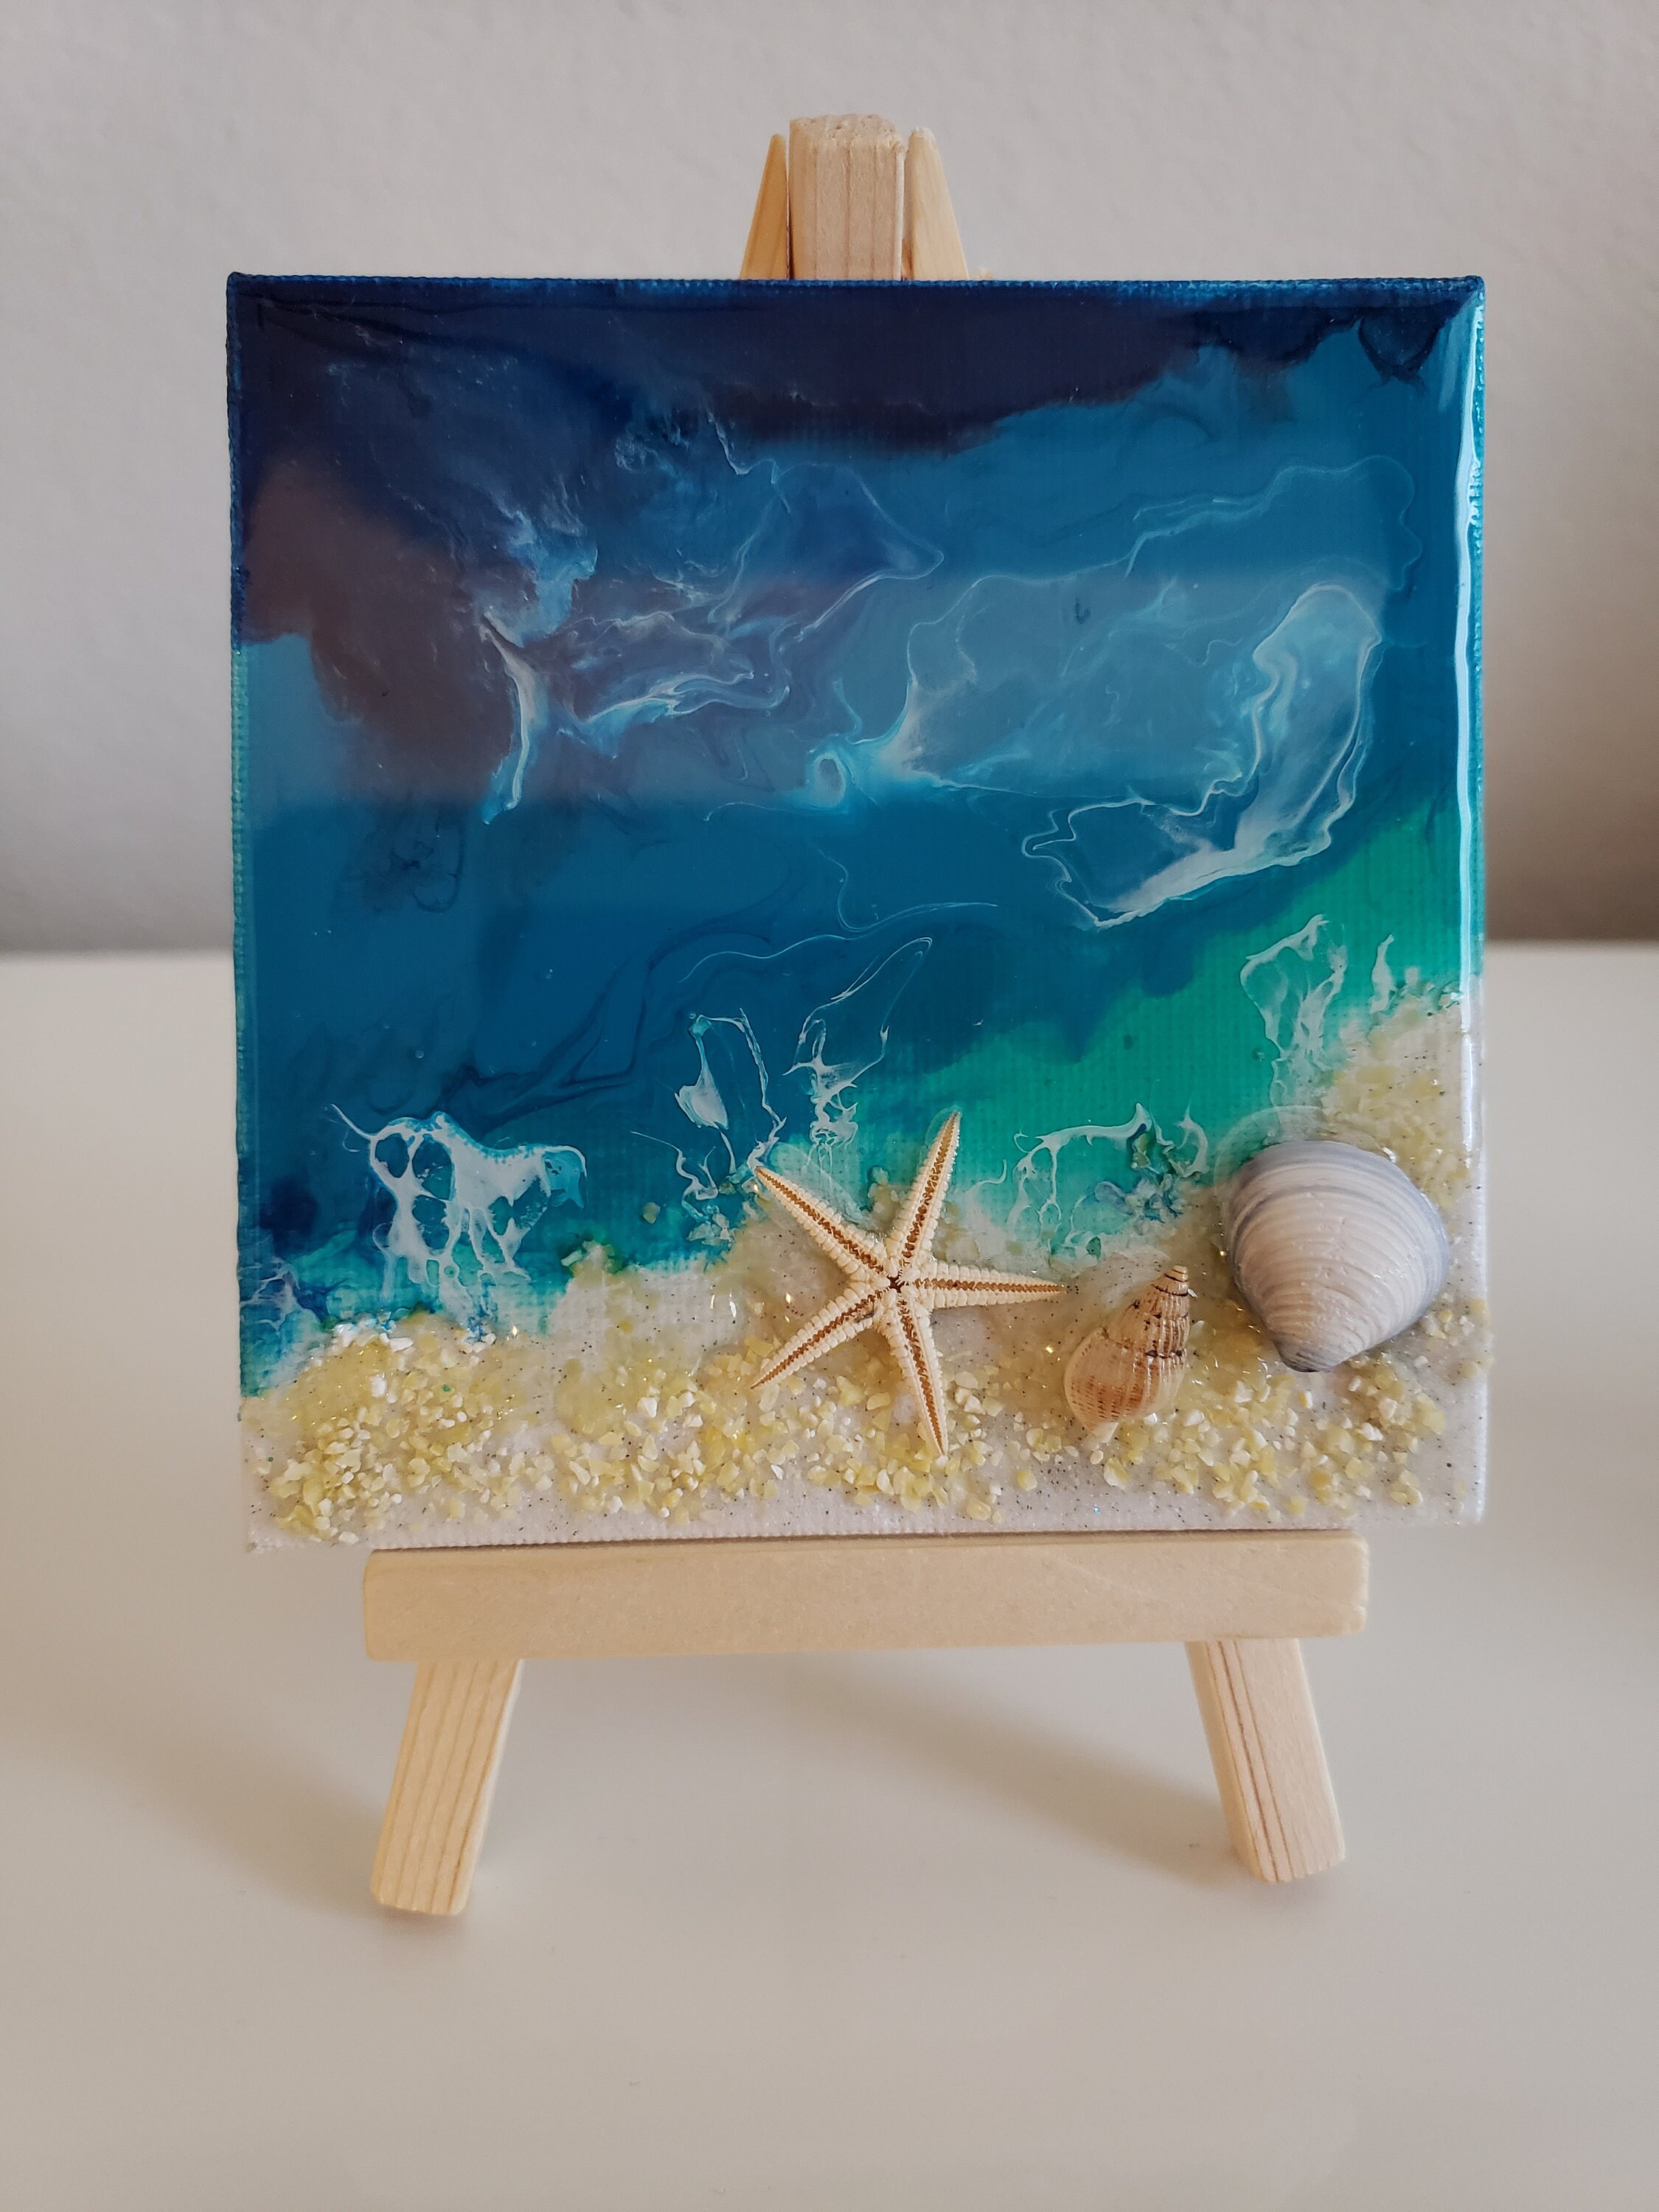 Mini Deep Sea Paintingsmall Painting on an Easel Original Artwork